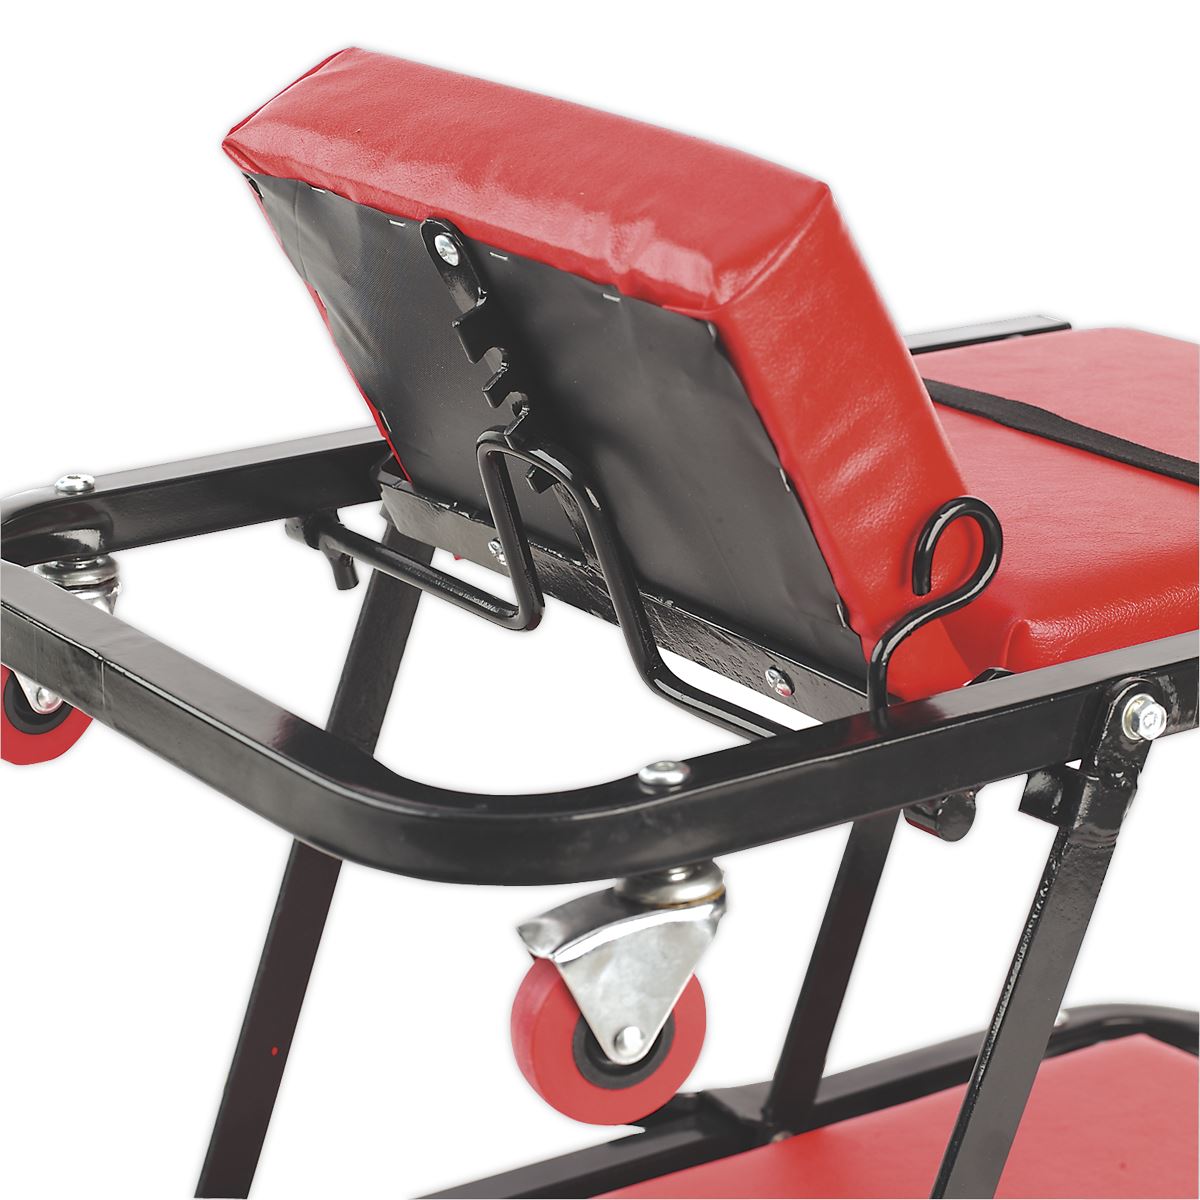 Sealey Steel Creeper/Seat with 7 Wheels & Adjustable Head Rest